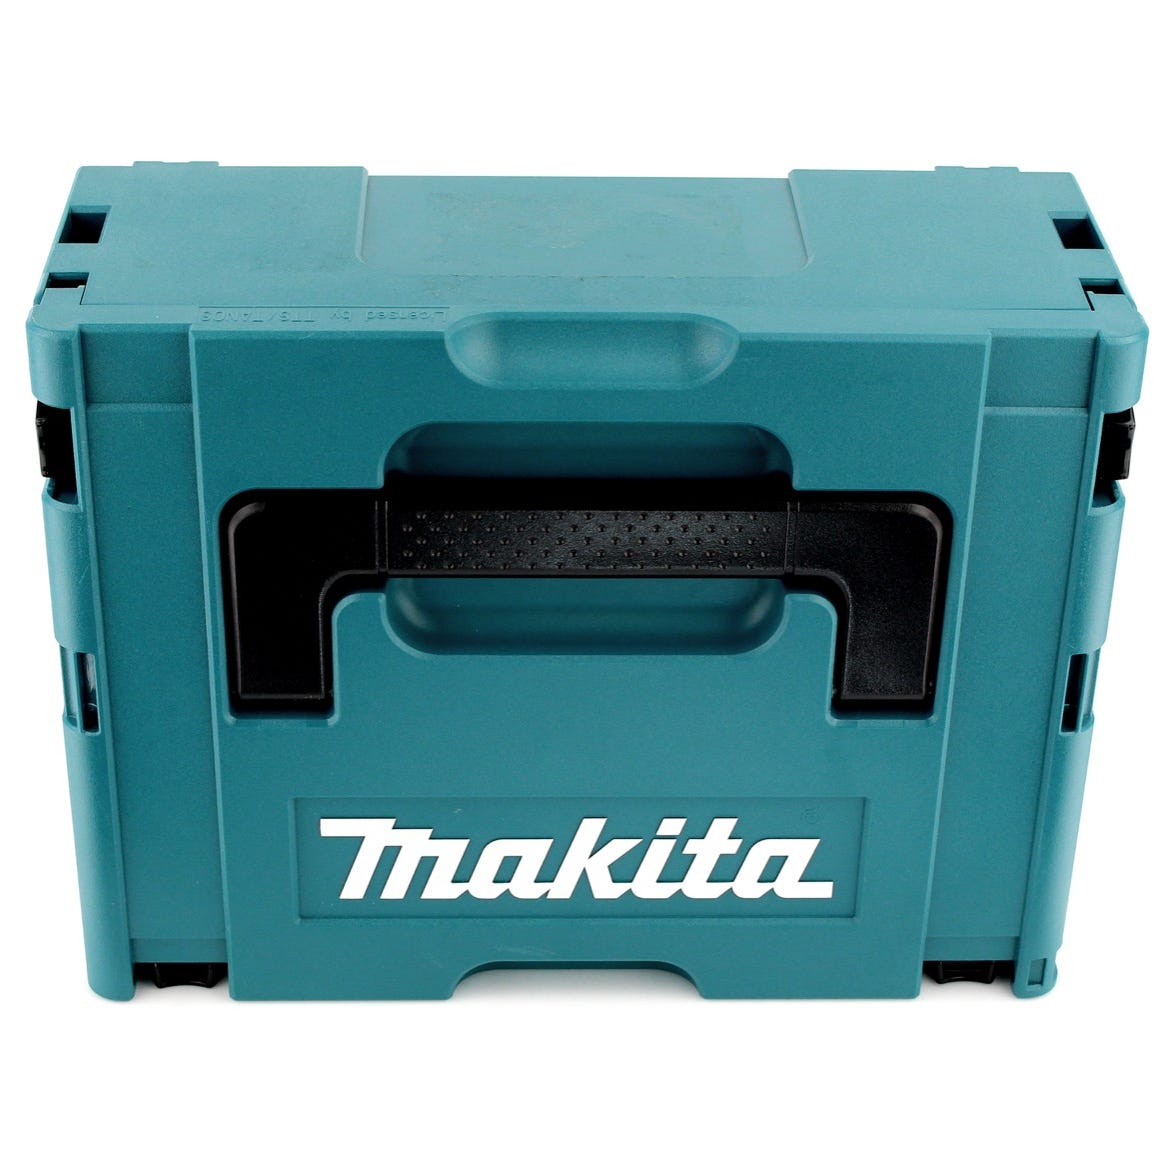 Makita DJV 182 G1J Scie sauteuse sans fil 18V Brushless 26mm + Coffret de transport Makpac + 1x Batterie BL1860B 6,0 Ah - sans 2